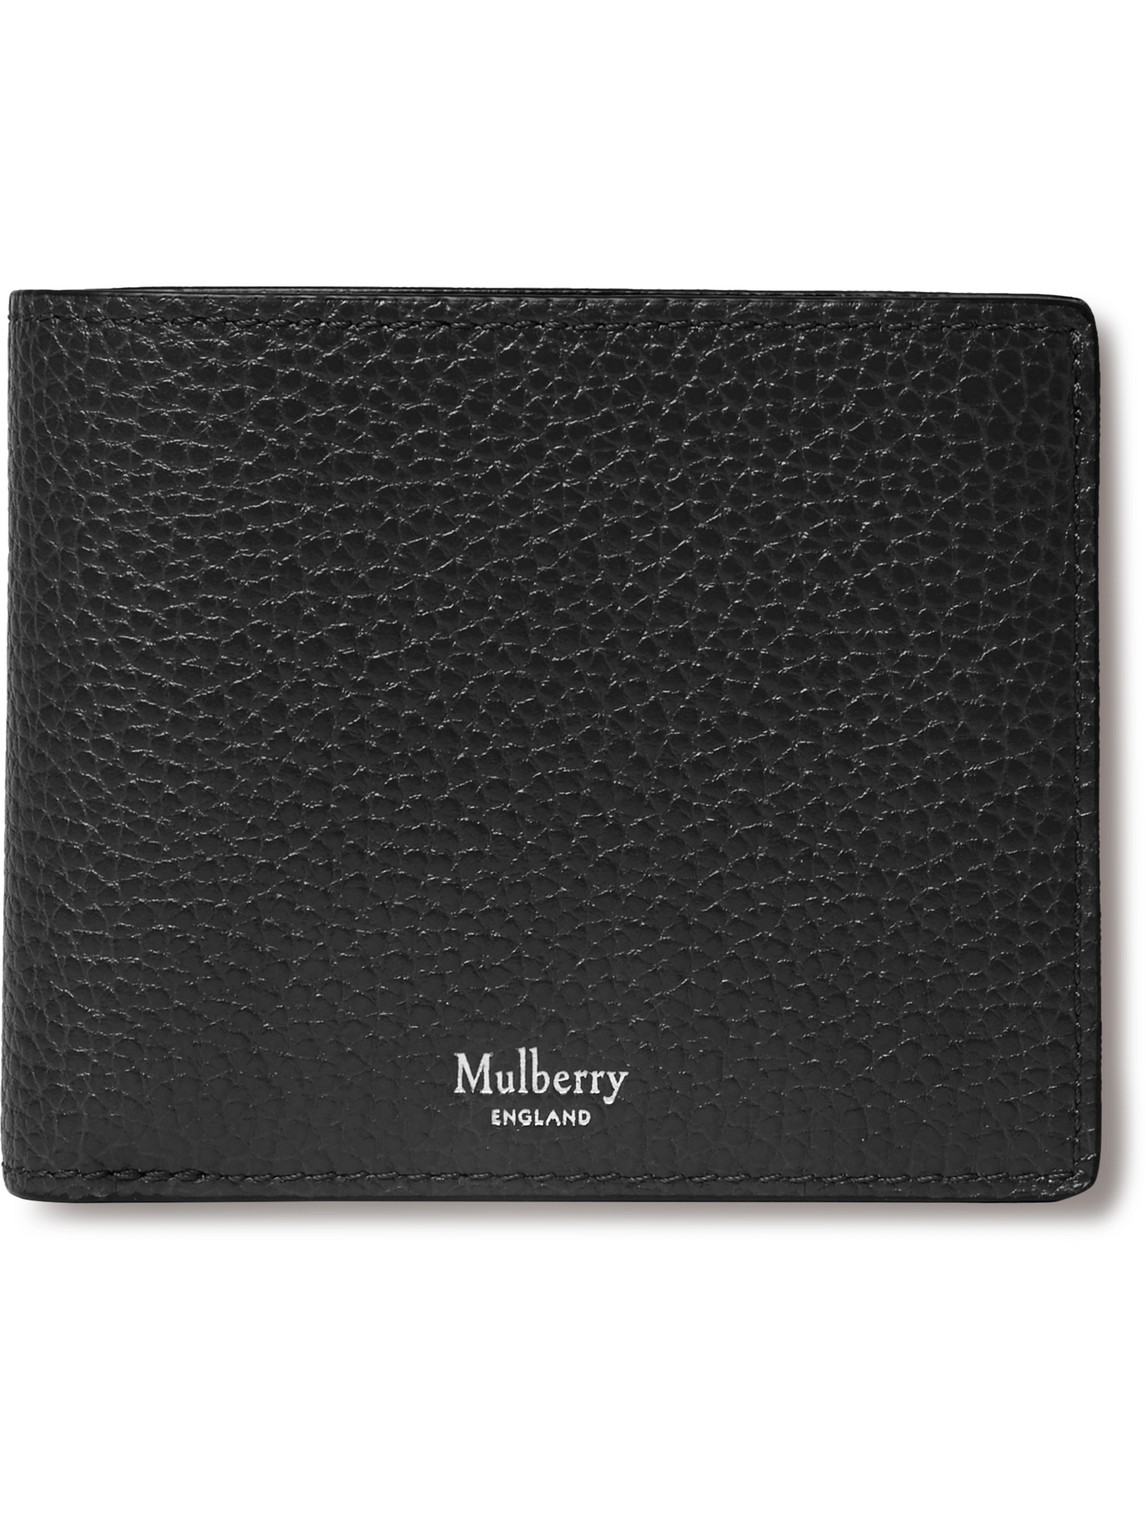 Mulberry Full-grain Leather Billfold Wallet In Black